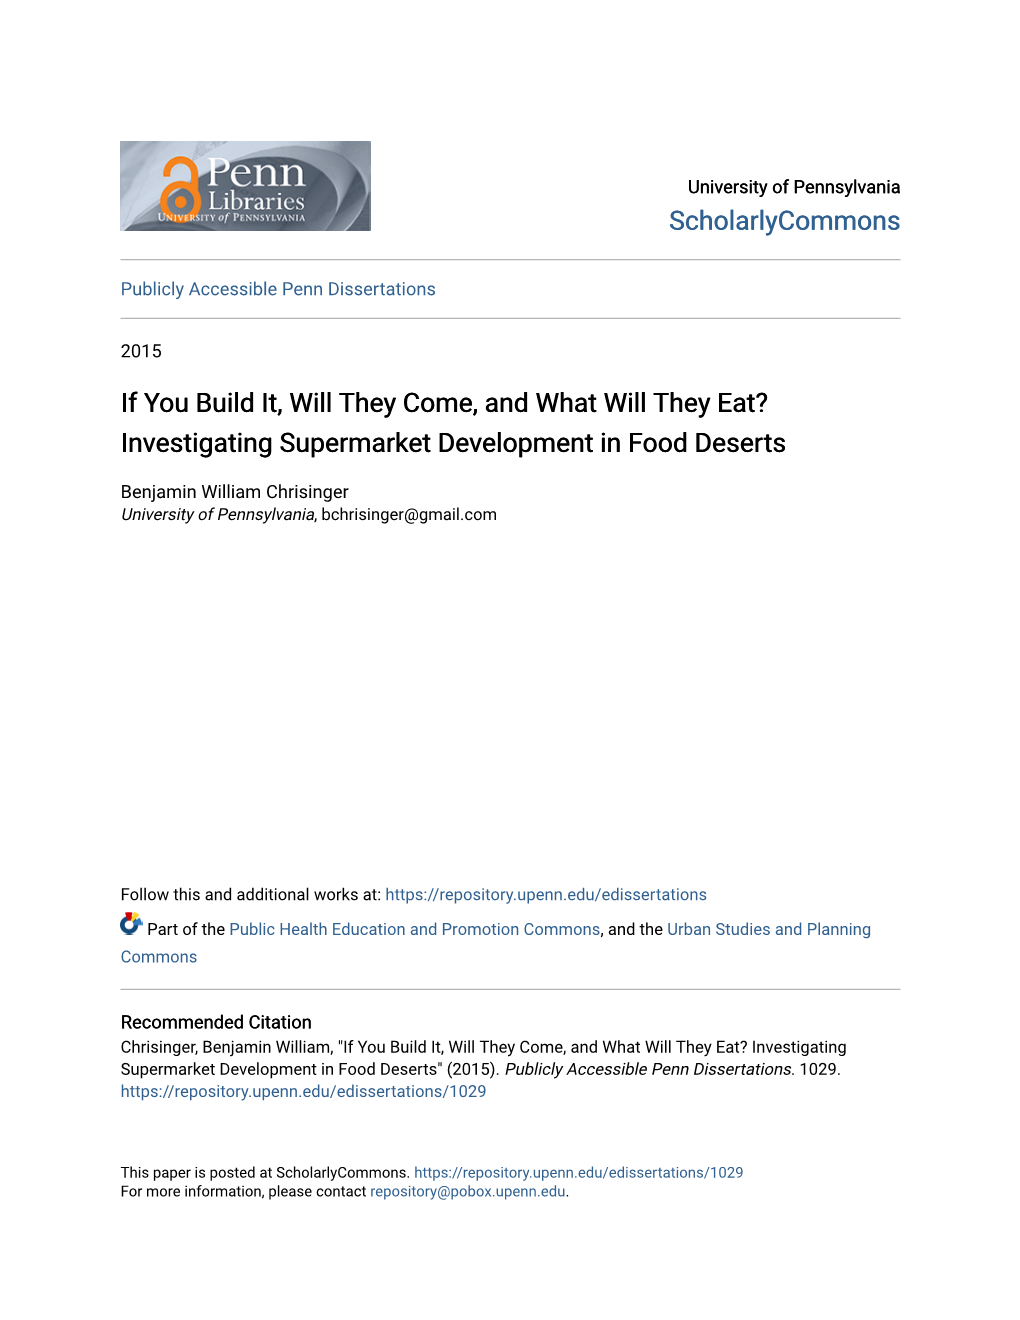 Investigating Supermarket Development in Food Deserts